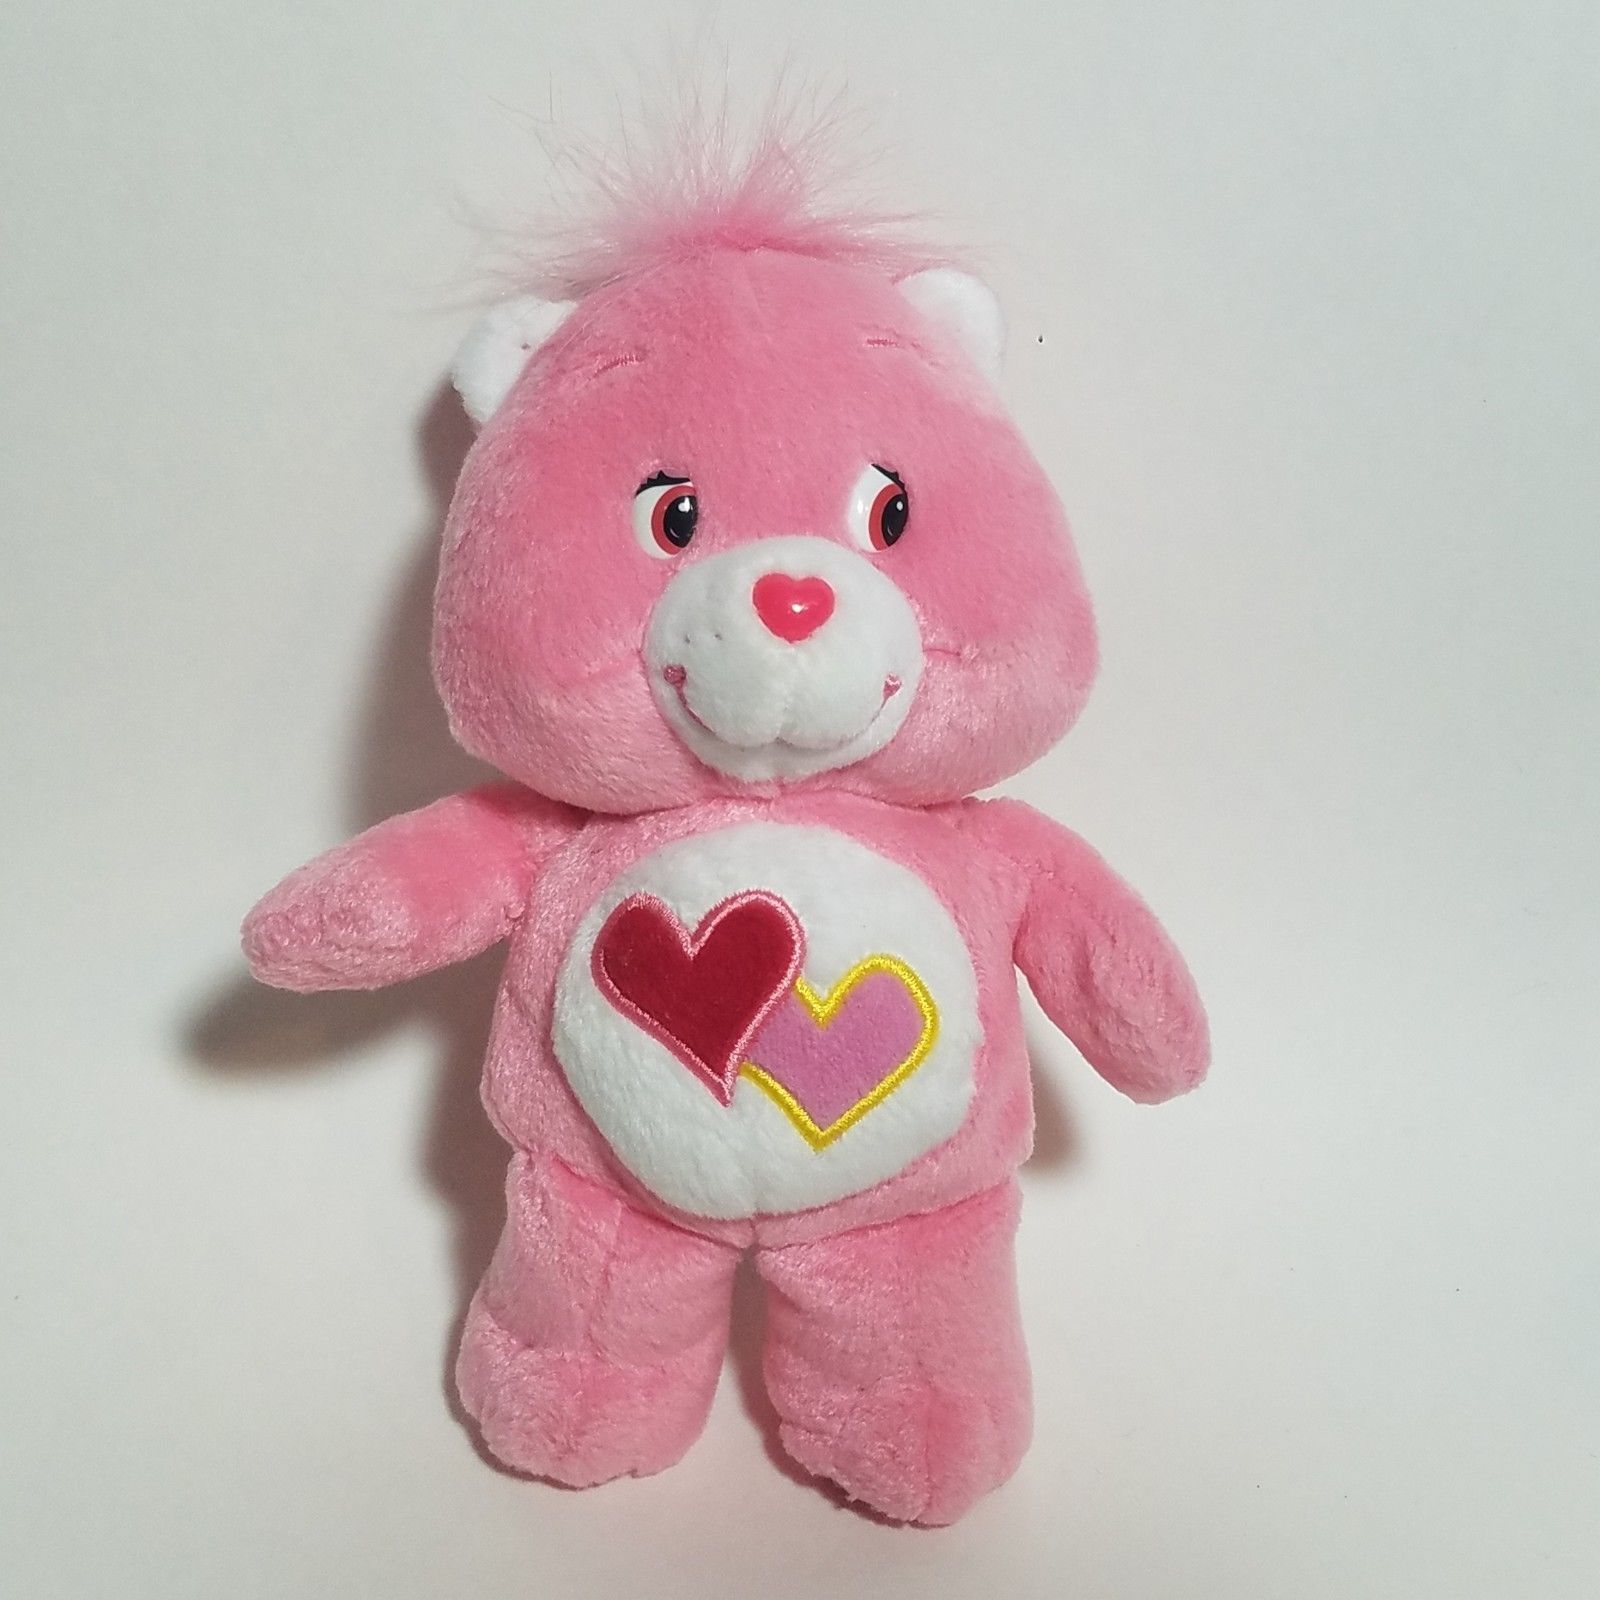 Love A Lot Pink Hearts Care Bear 2004 Stuffed Toy Animal CAREBEAR 6